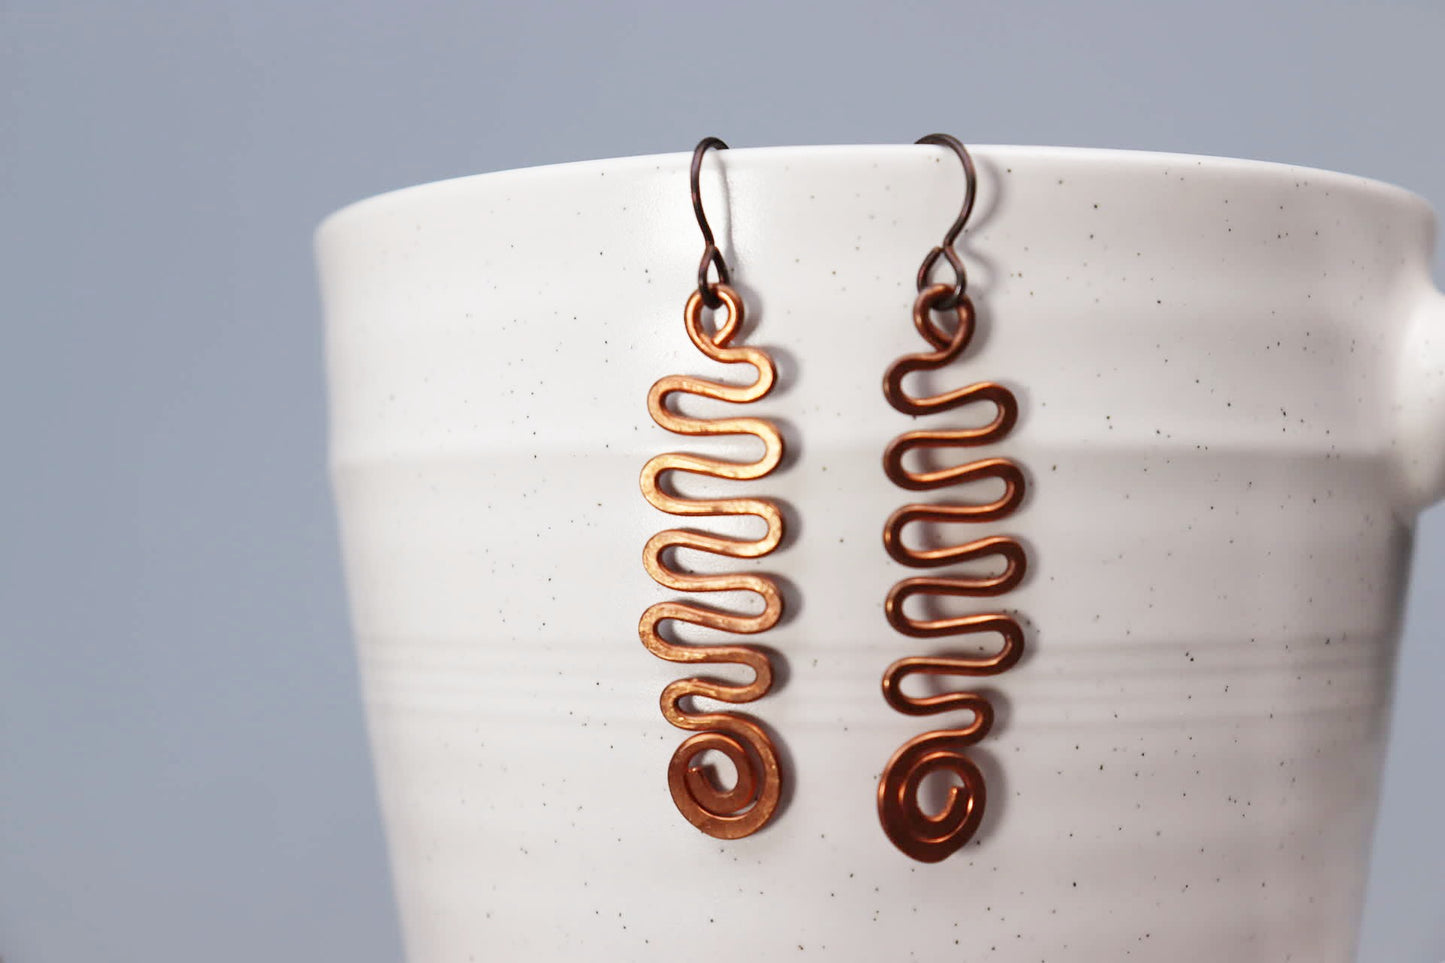 Medium Wave Copper Earrings